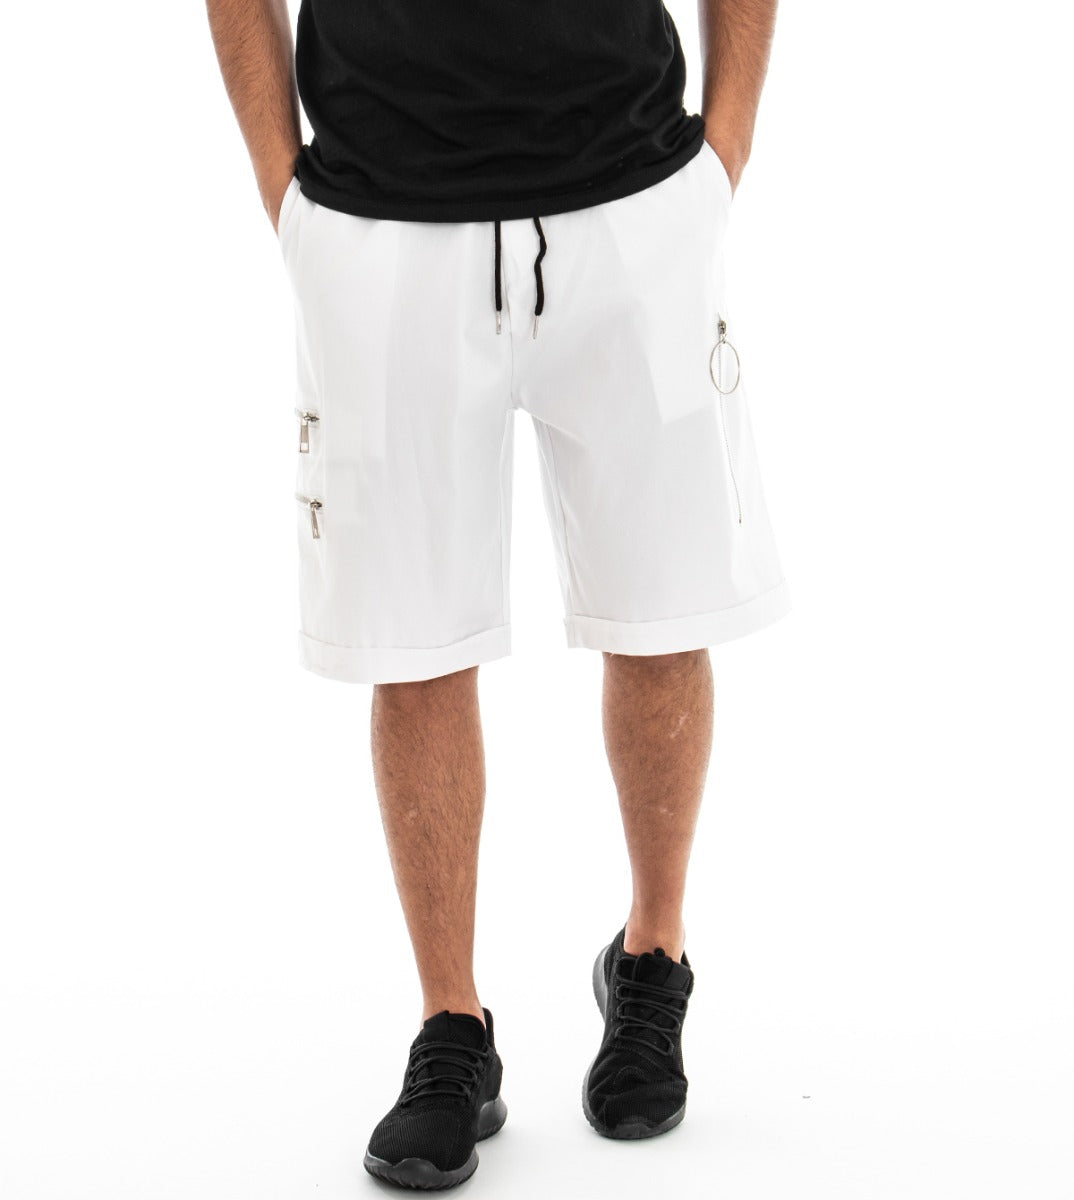 Bermuda Men's Short Shorts White Elastic Low Crotch GIOSAL-PC1353A